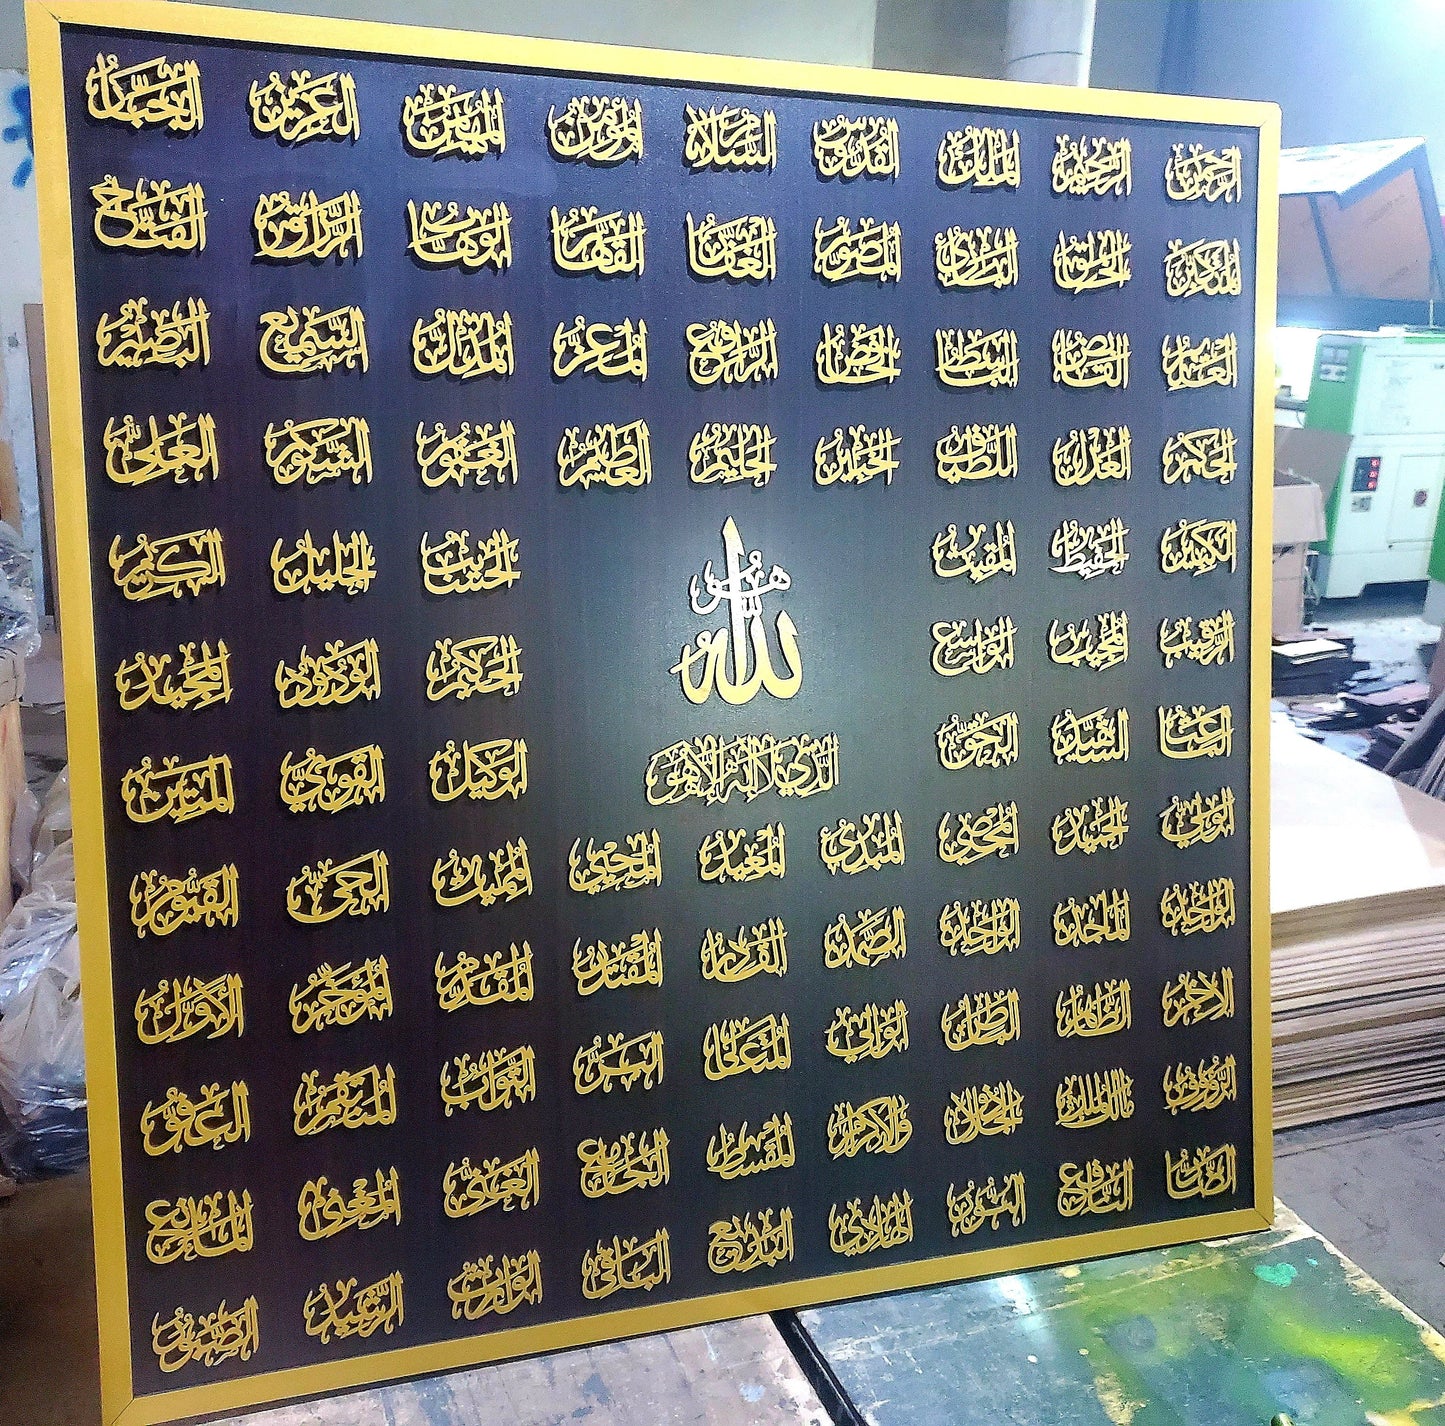 99 Names of Allah (Square)